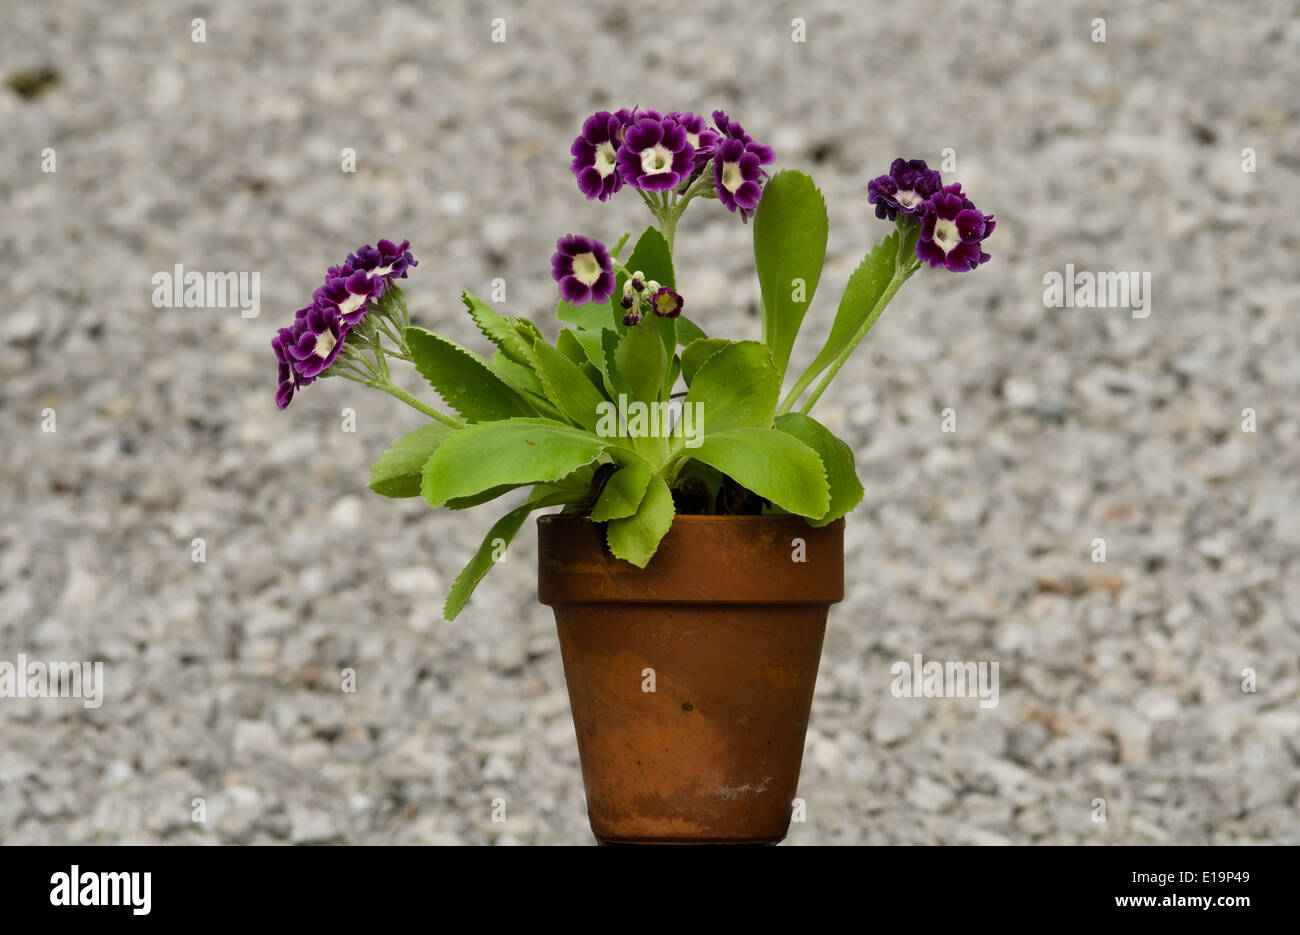 Primula auricula plant in a pot Stock Photo